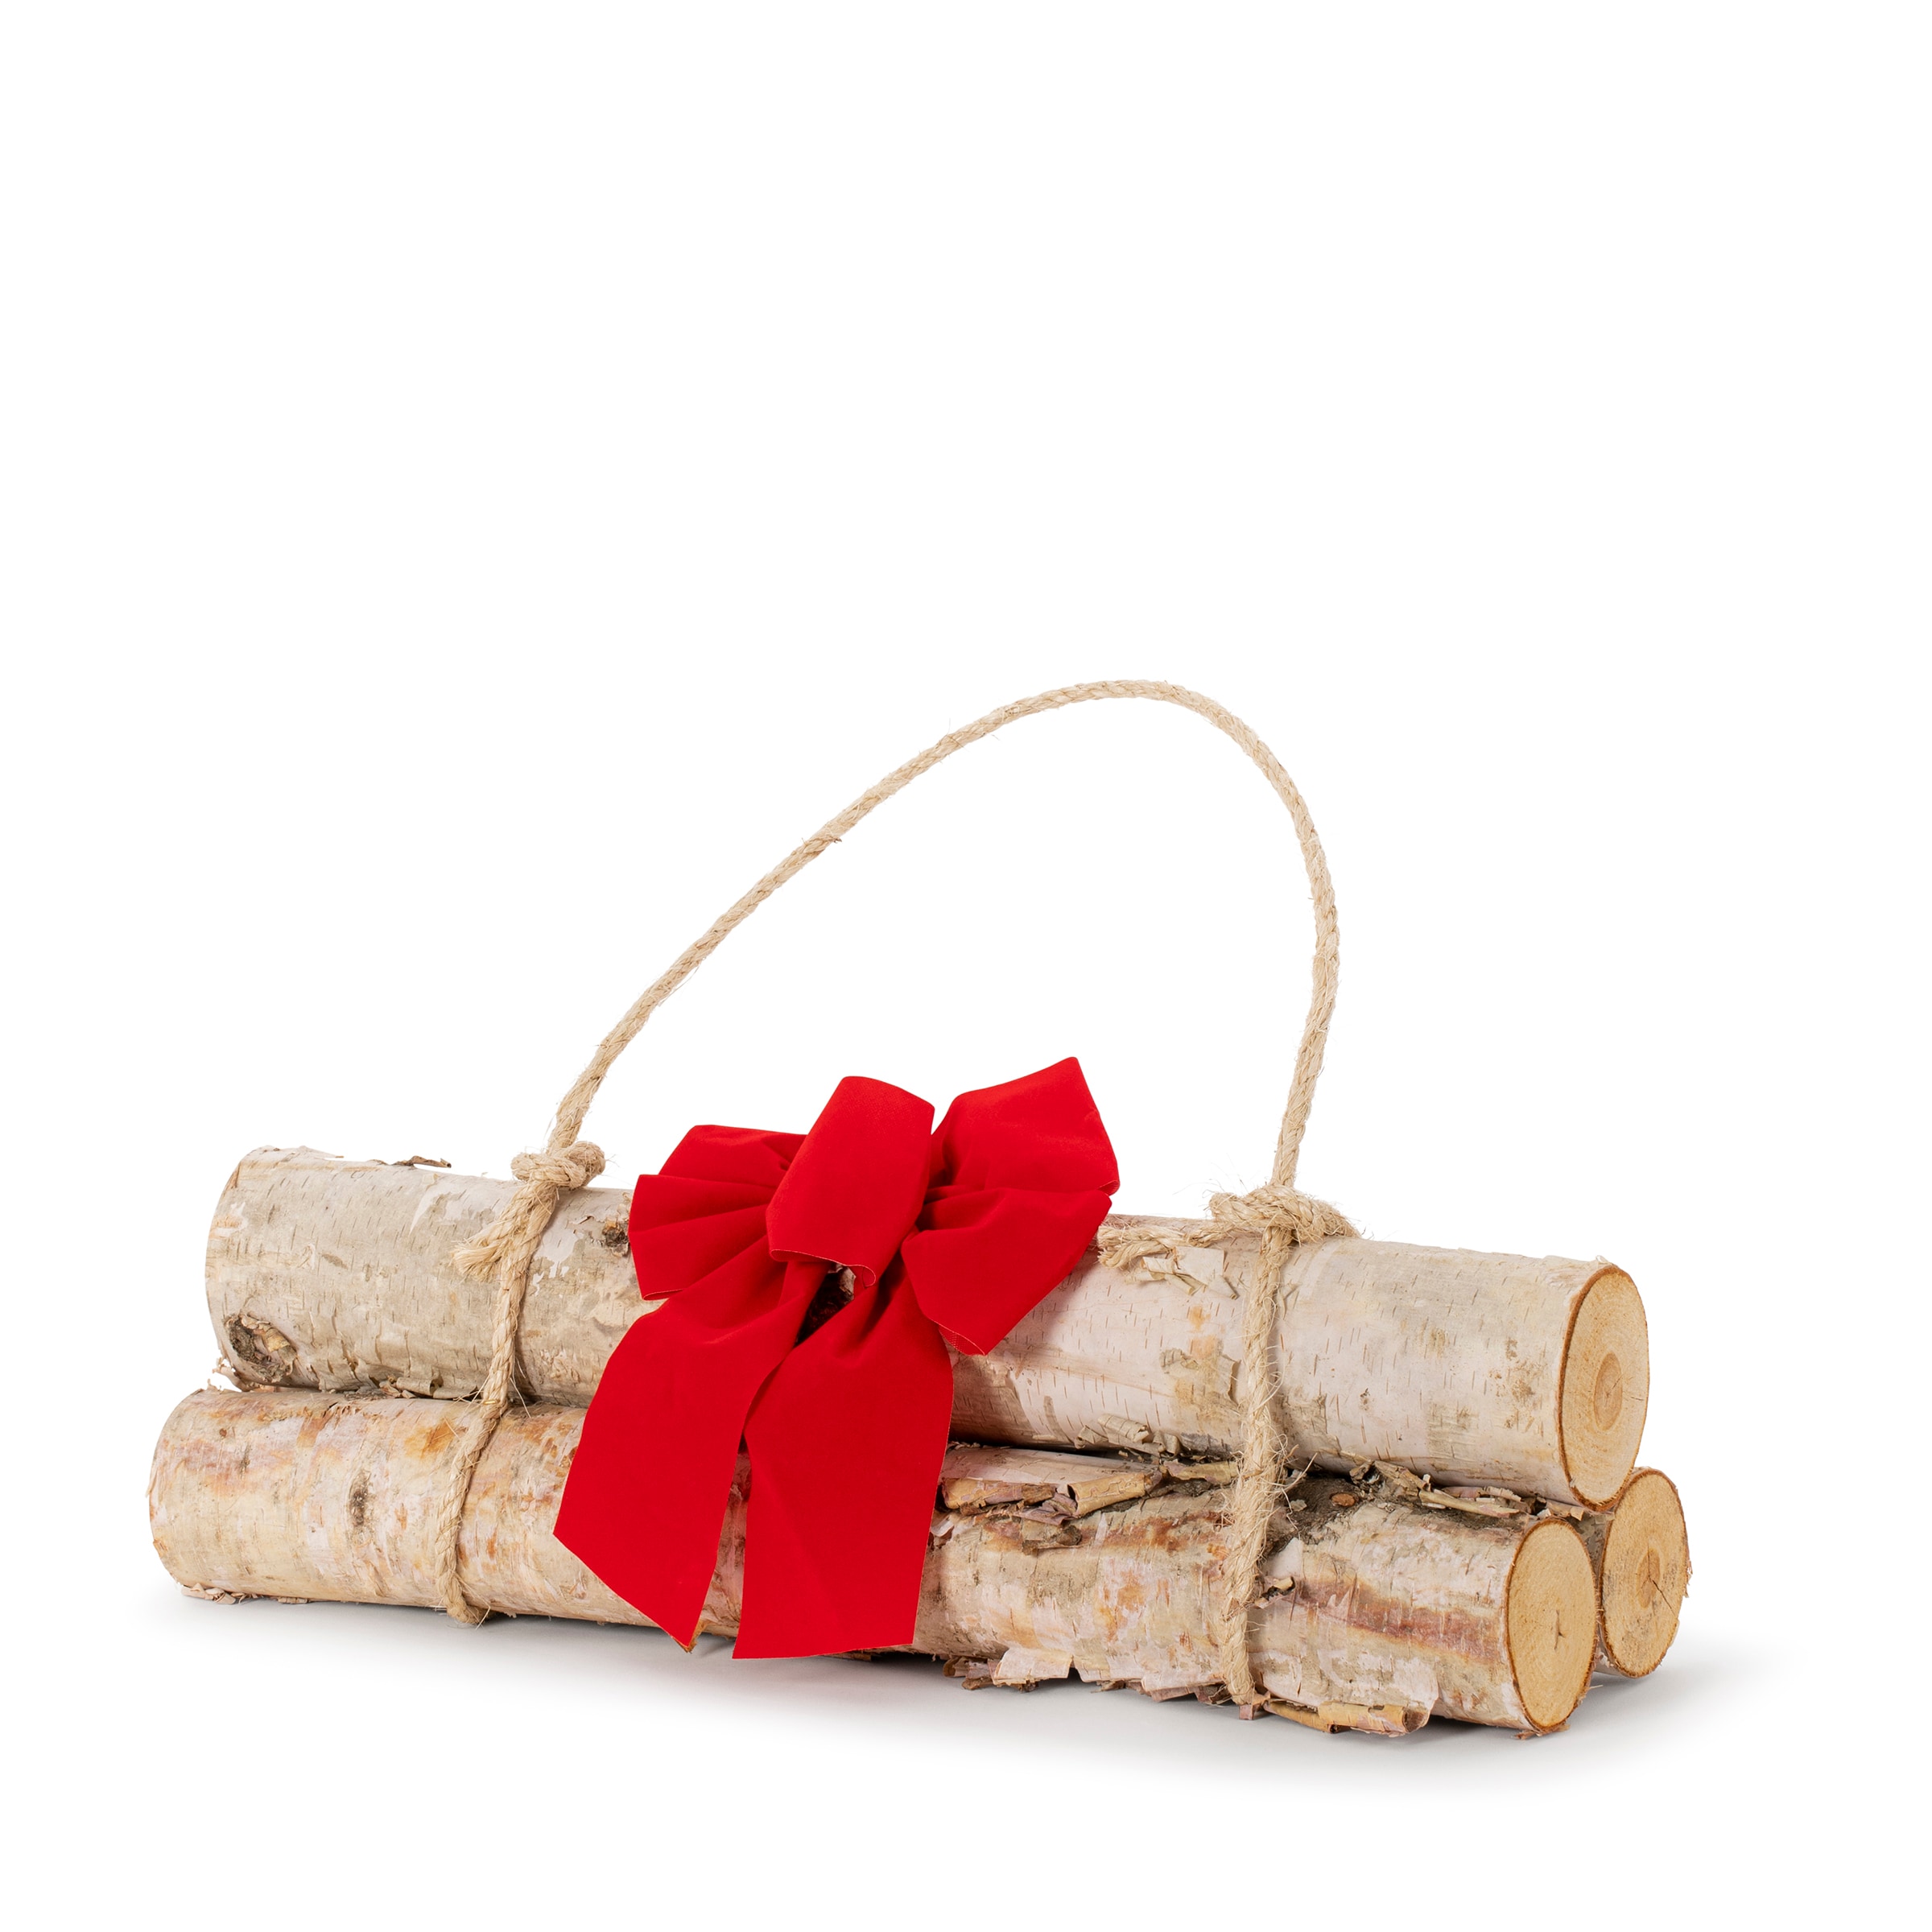 Birch Log Bundle, Seasonal and Holiday Decorations